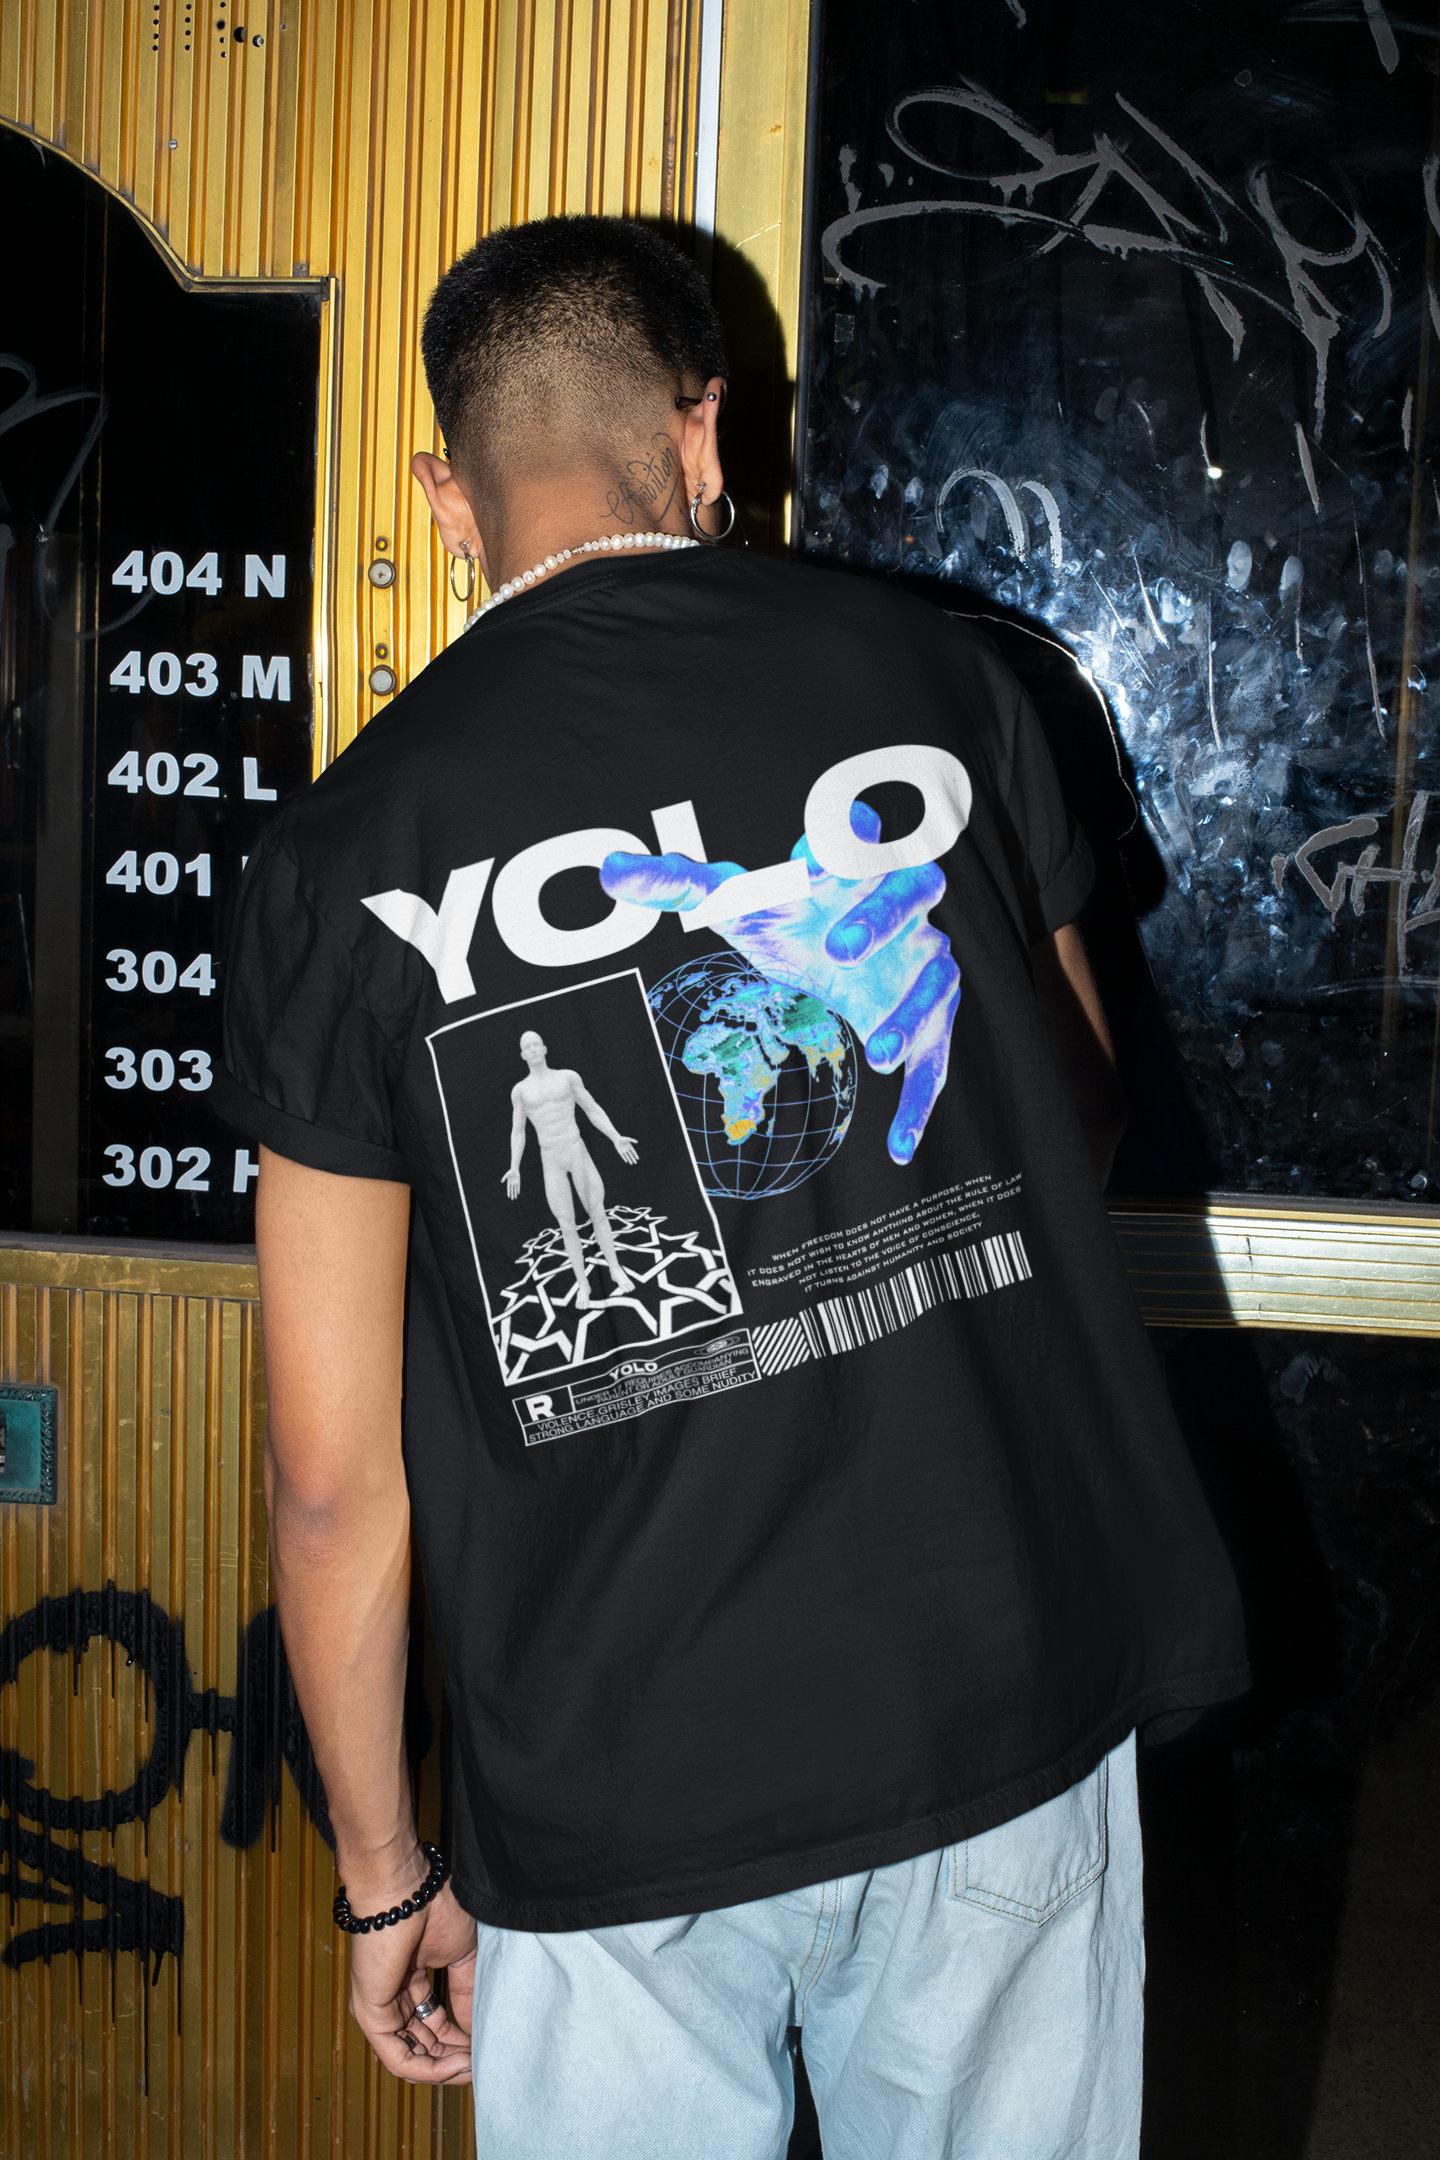 YOLO Revolution T shirt